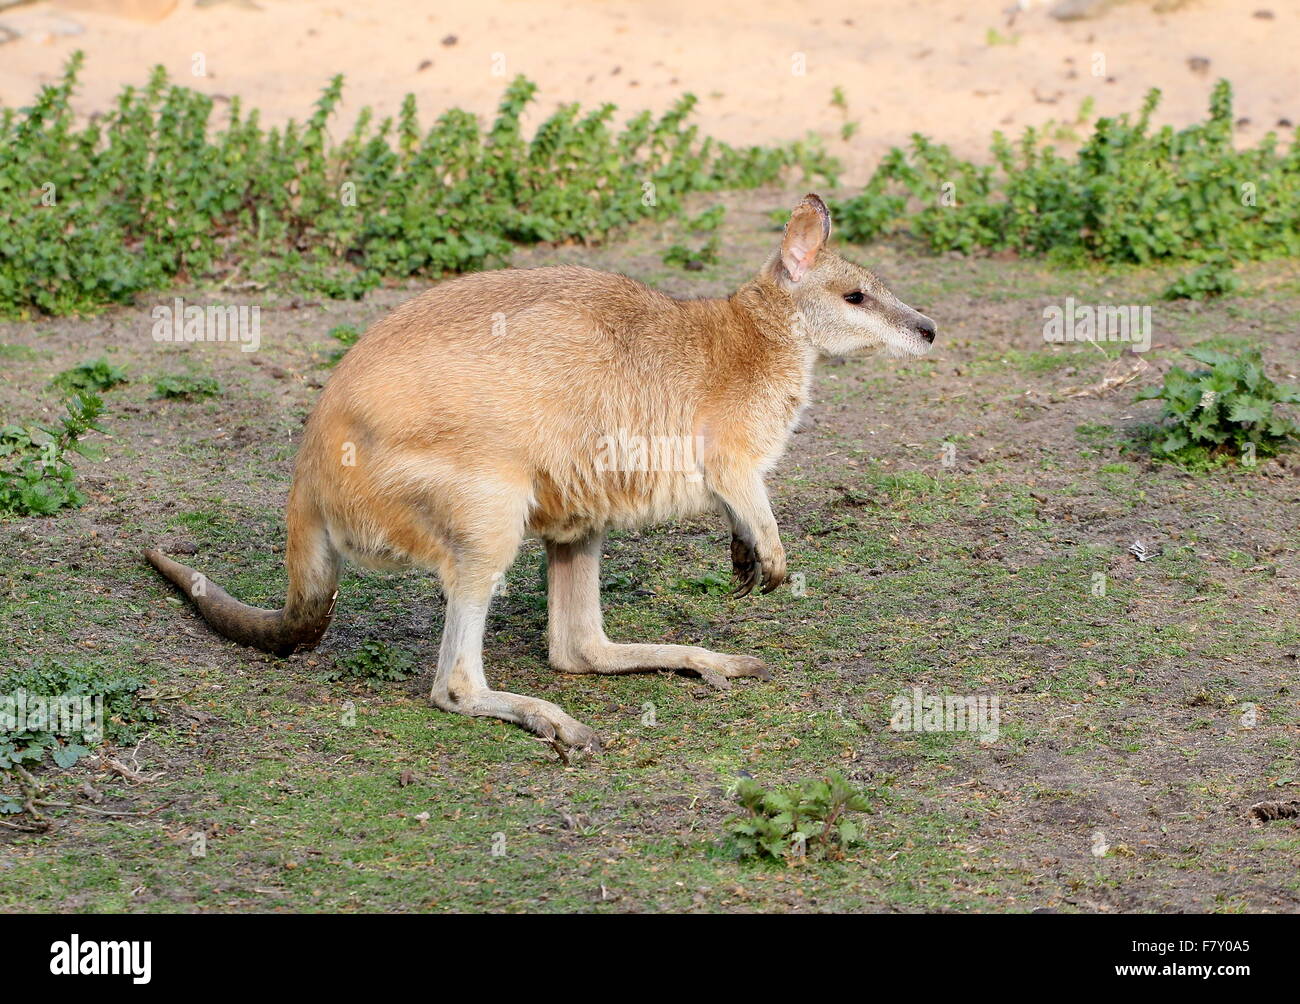 North Australian Agile or Sandy wallaby (Macropus agilis), seen in profile Stock Photo